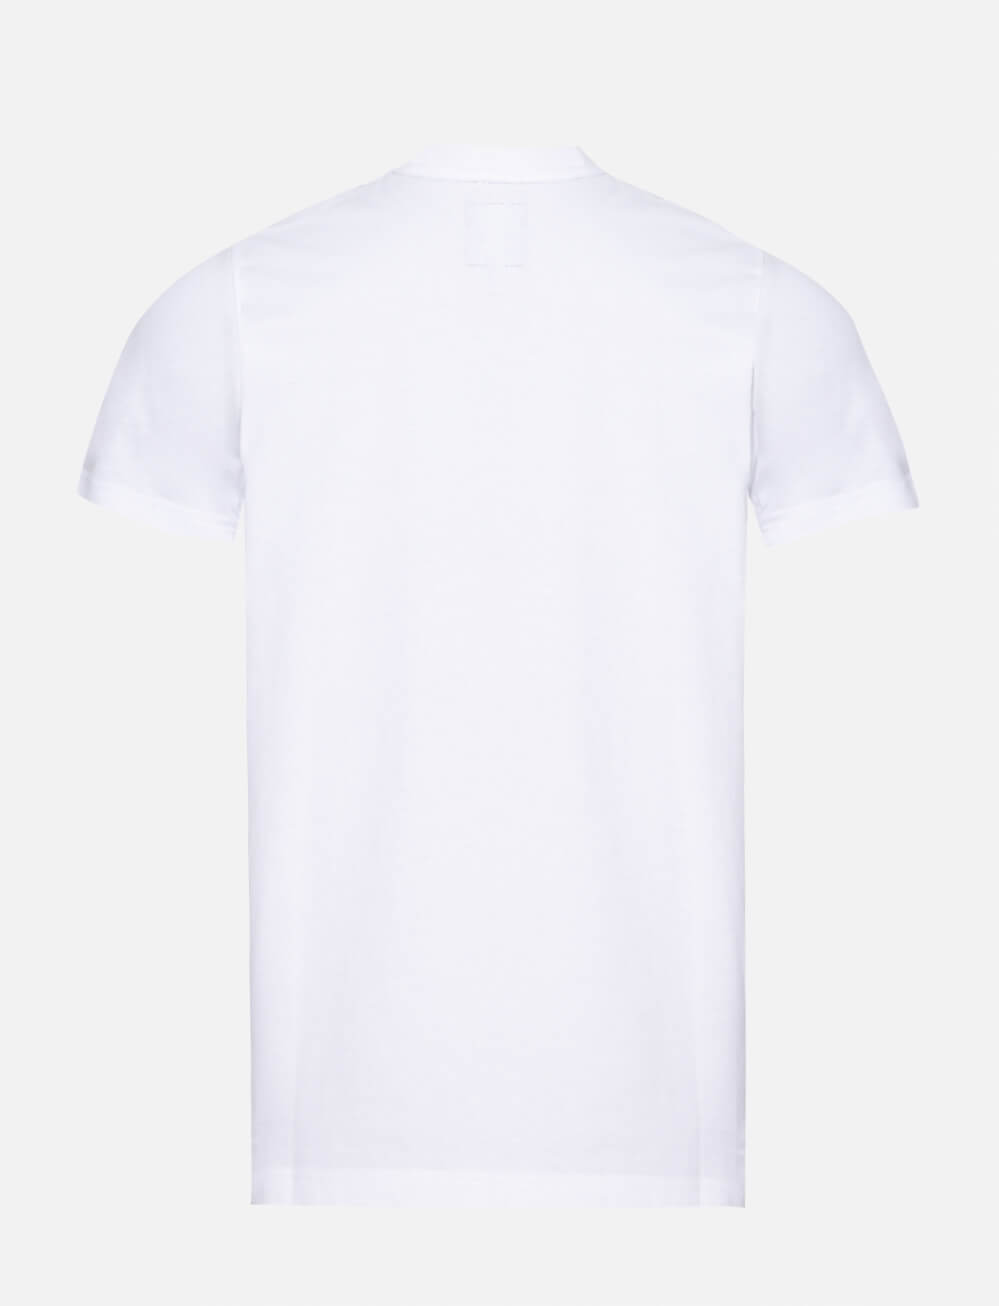 SVNS Perth Event T-Shirt - White – HSBC SVNS Official Merchandise